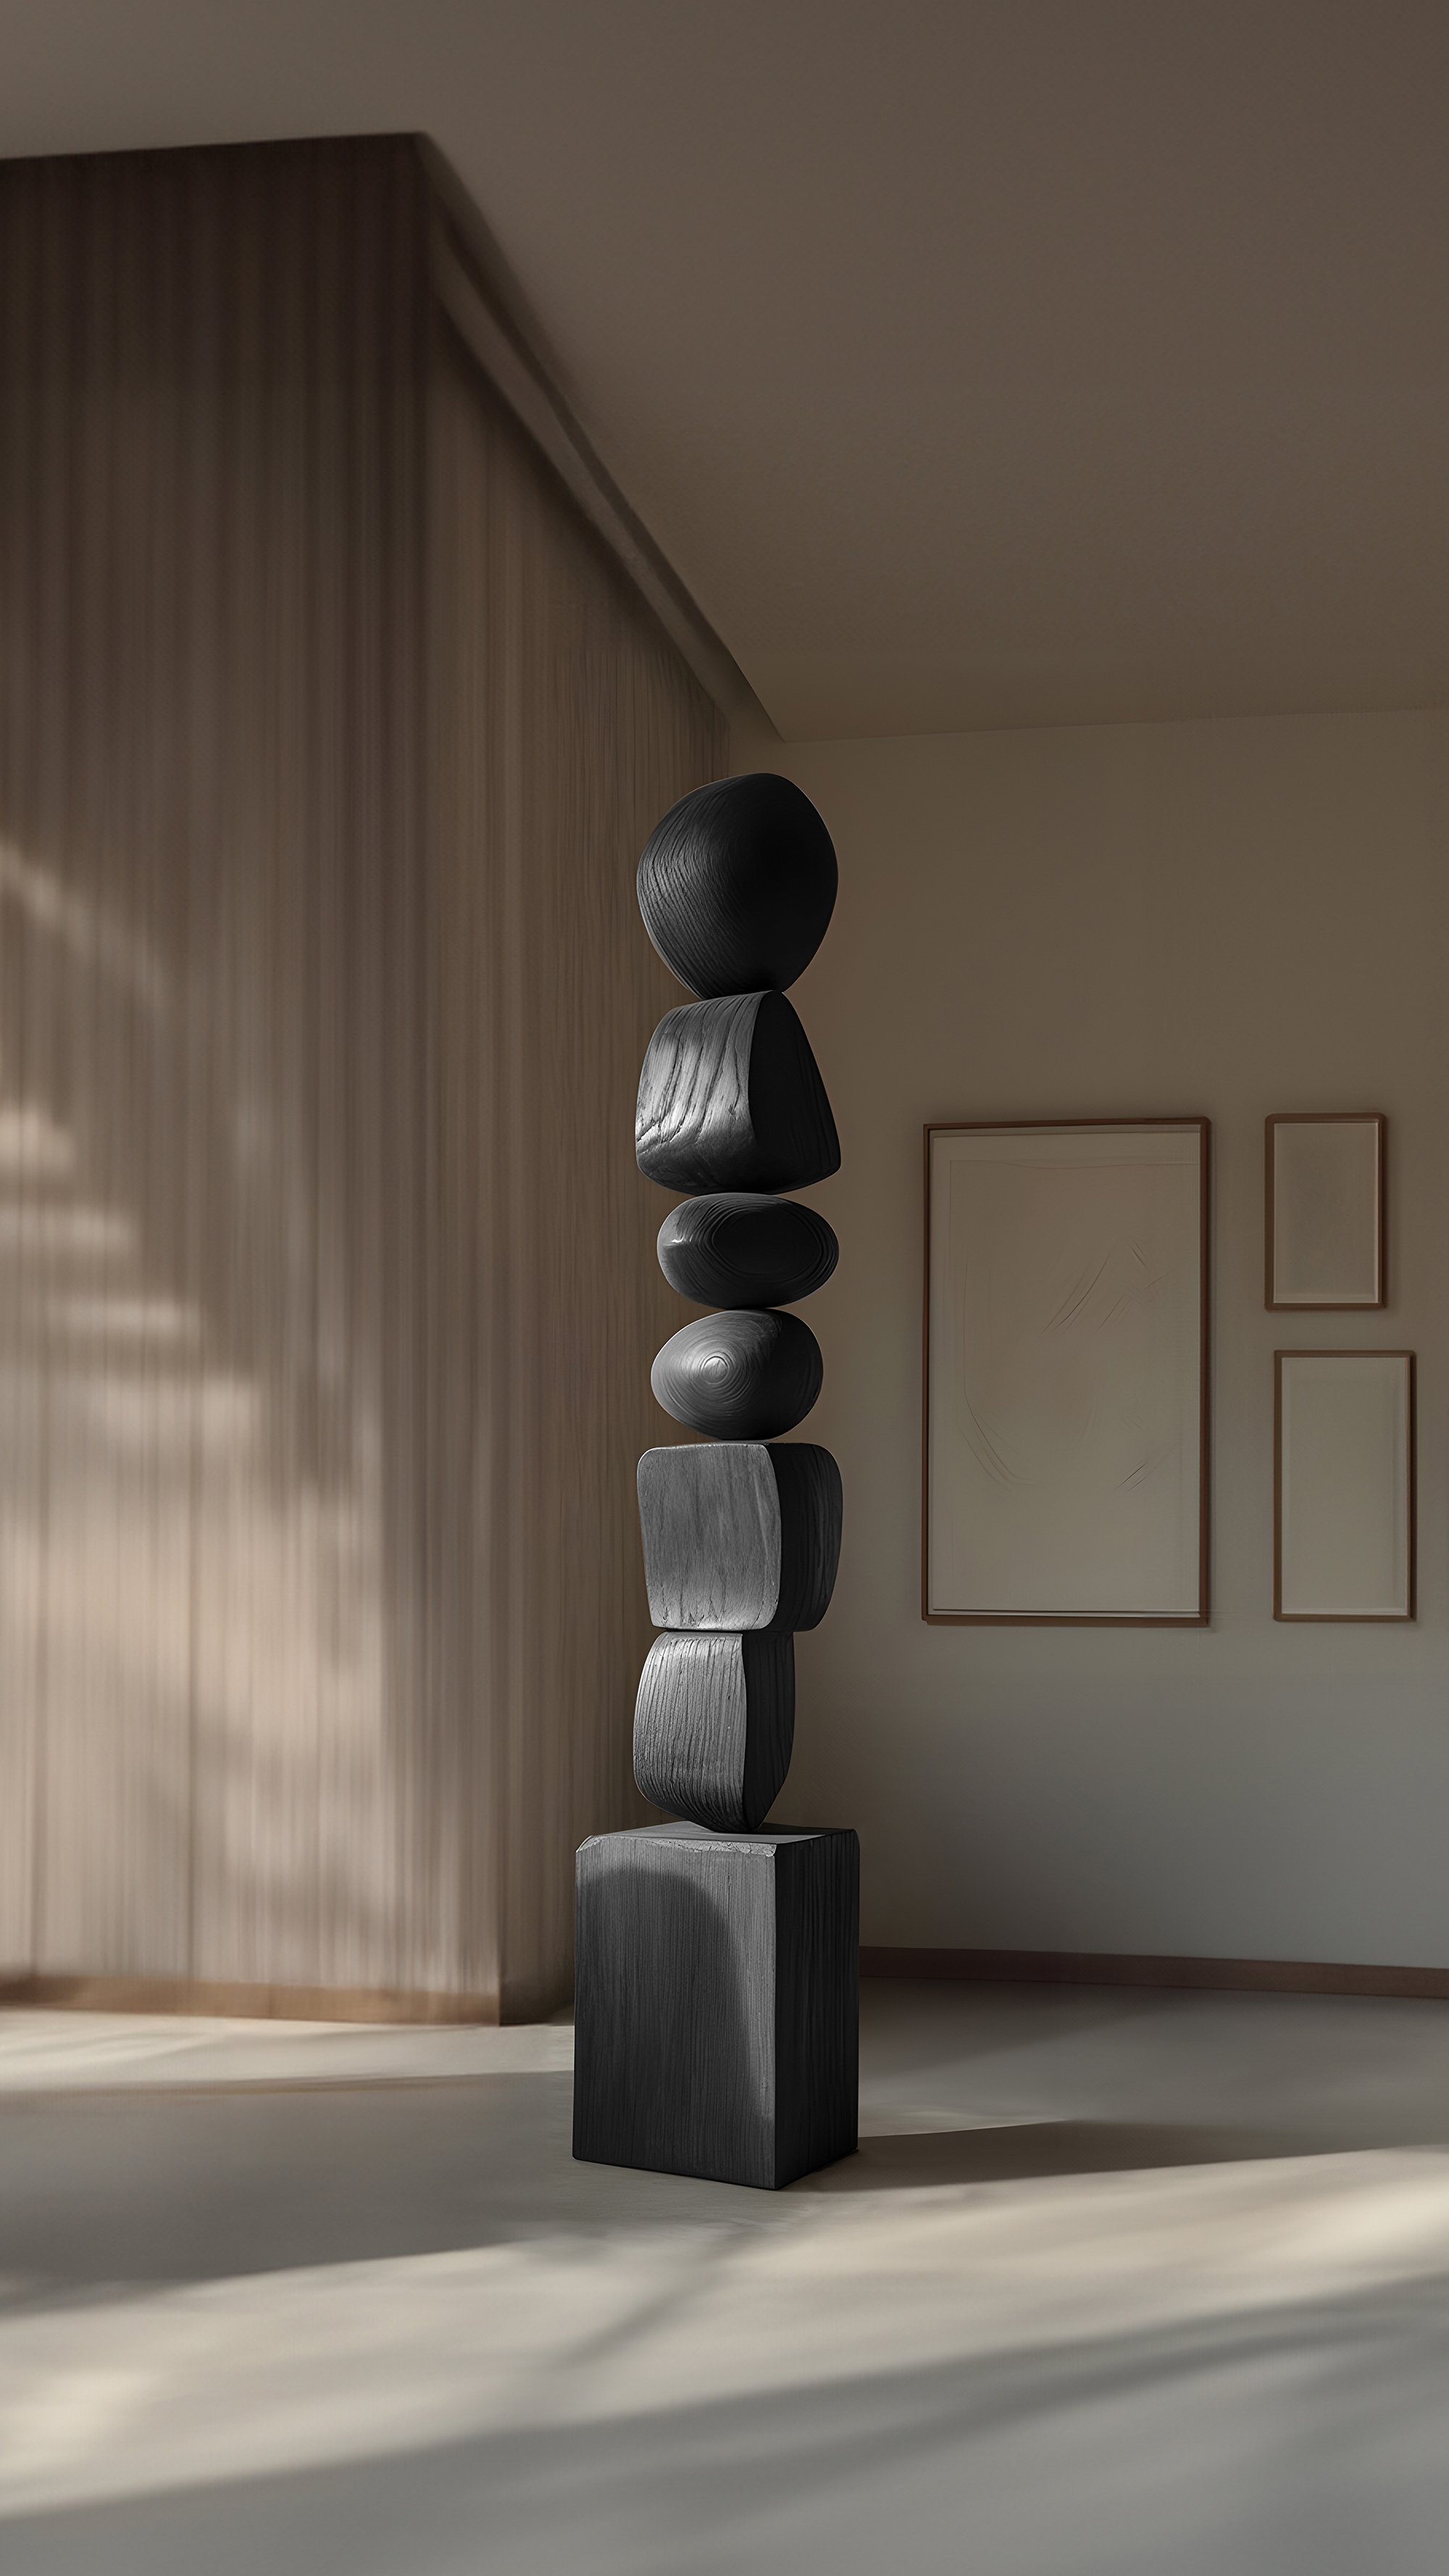 Sleek, Dark Abstract Design in Black Solid Wood by Escalona, Still Stand No96 -7.jpg